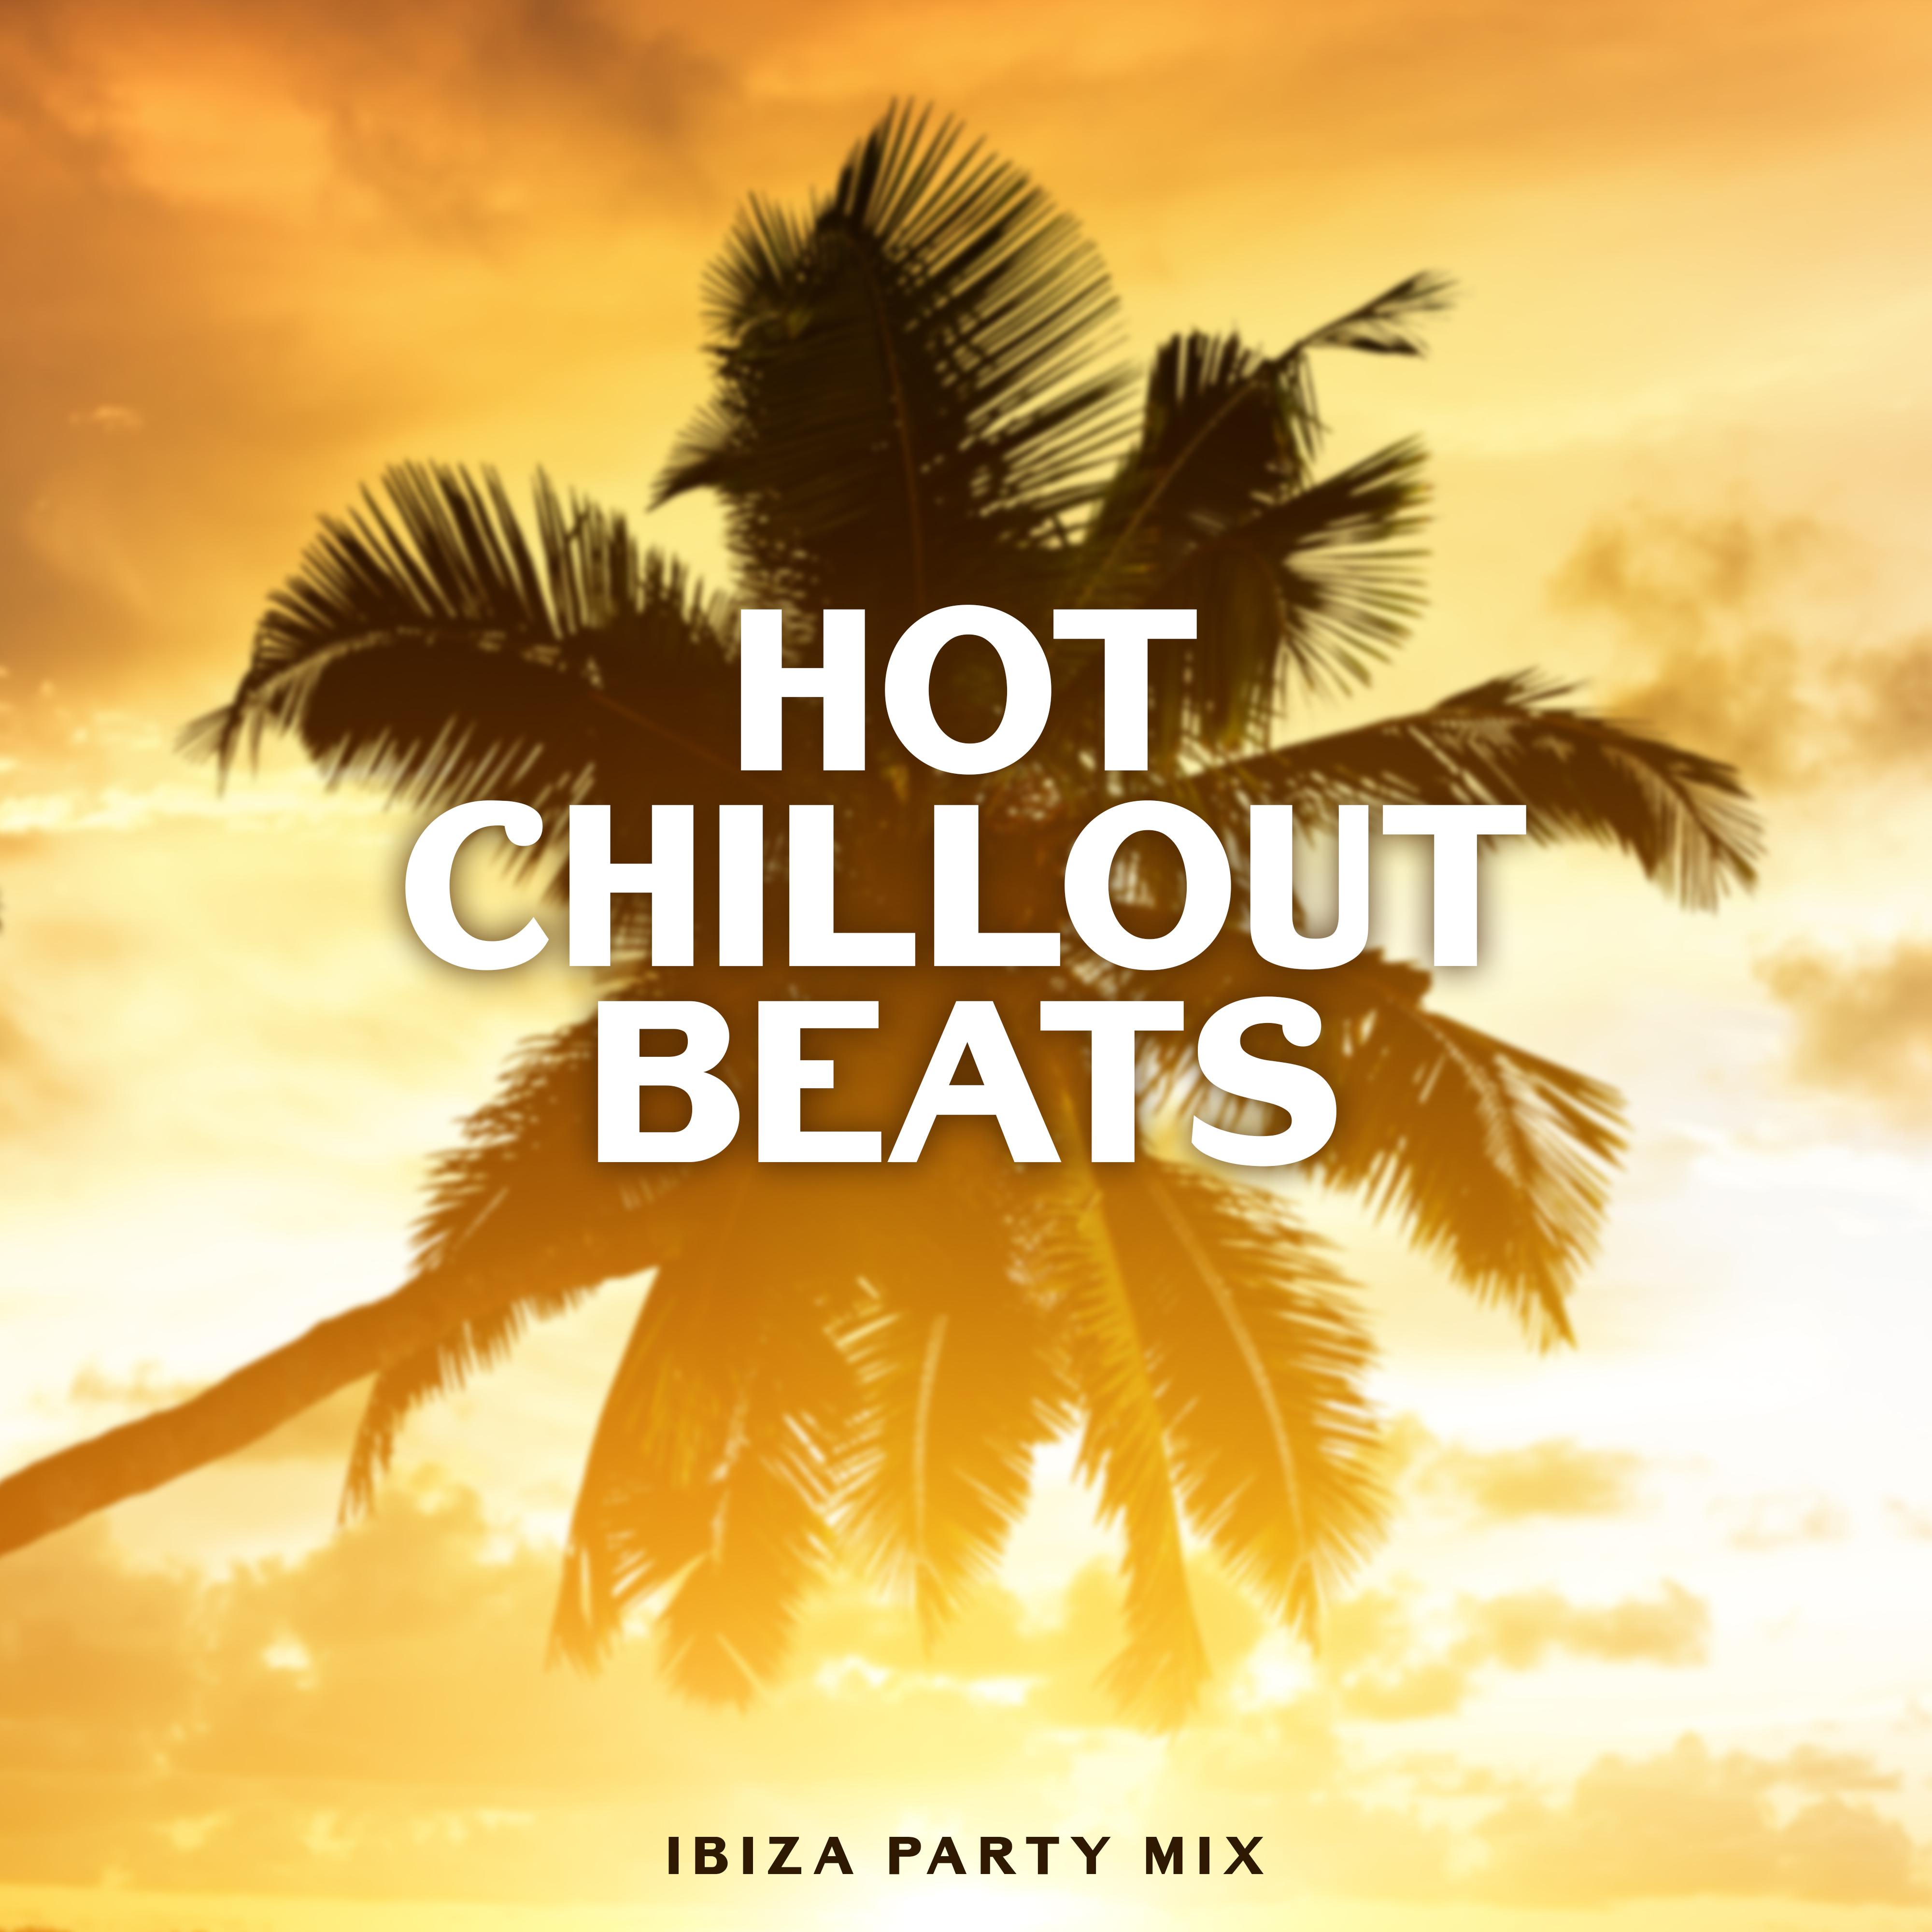 Hot Chillout Beats – Ibiza Party Mix